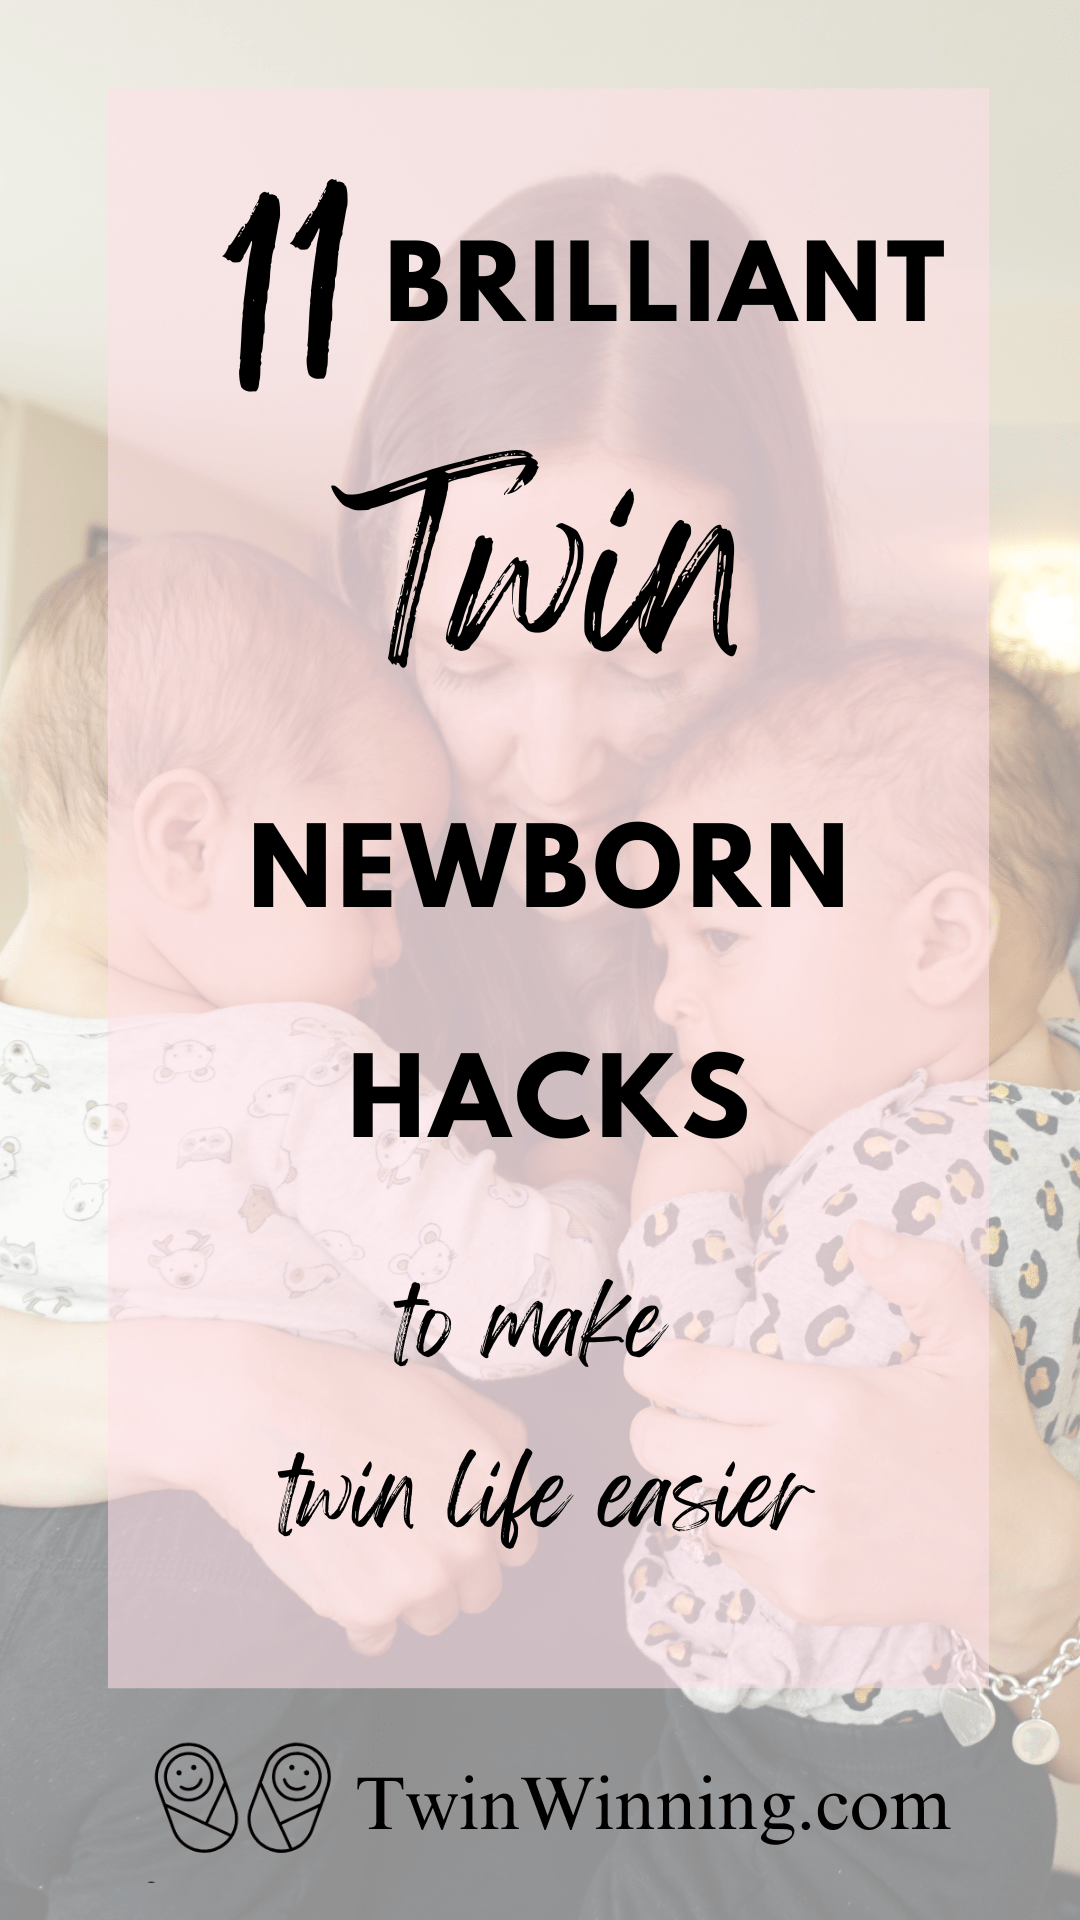 11 brilliant twin newborn hacks to simplify twin life